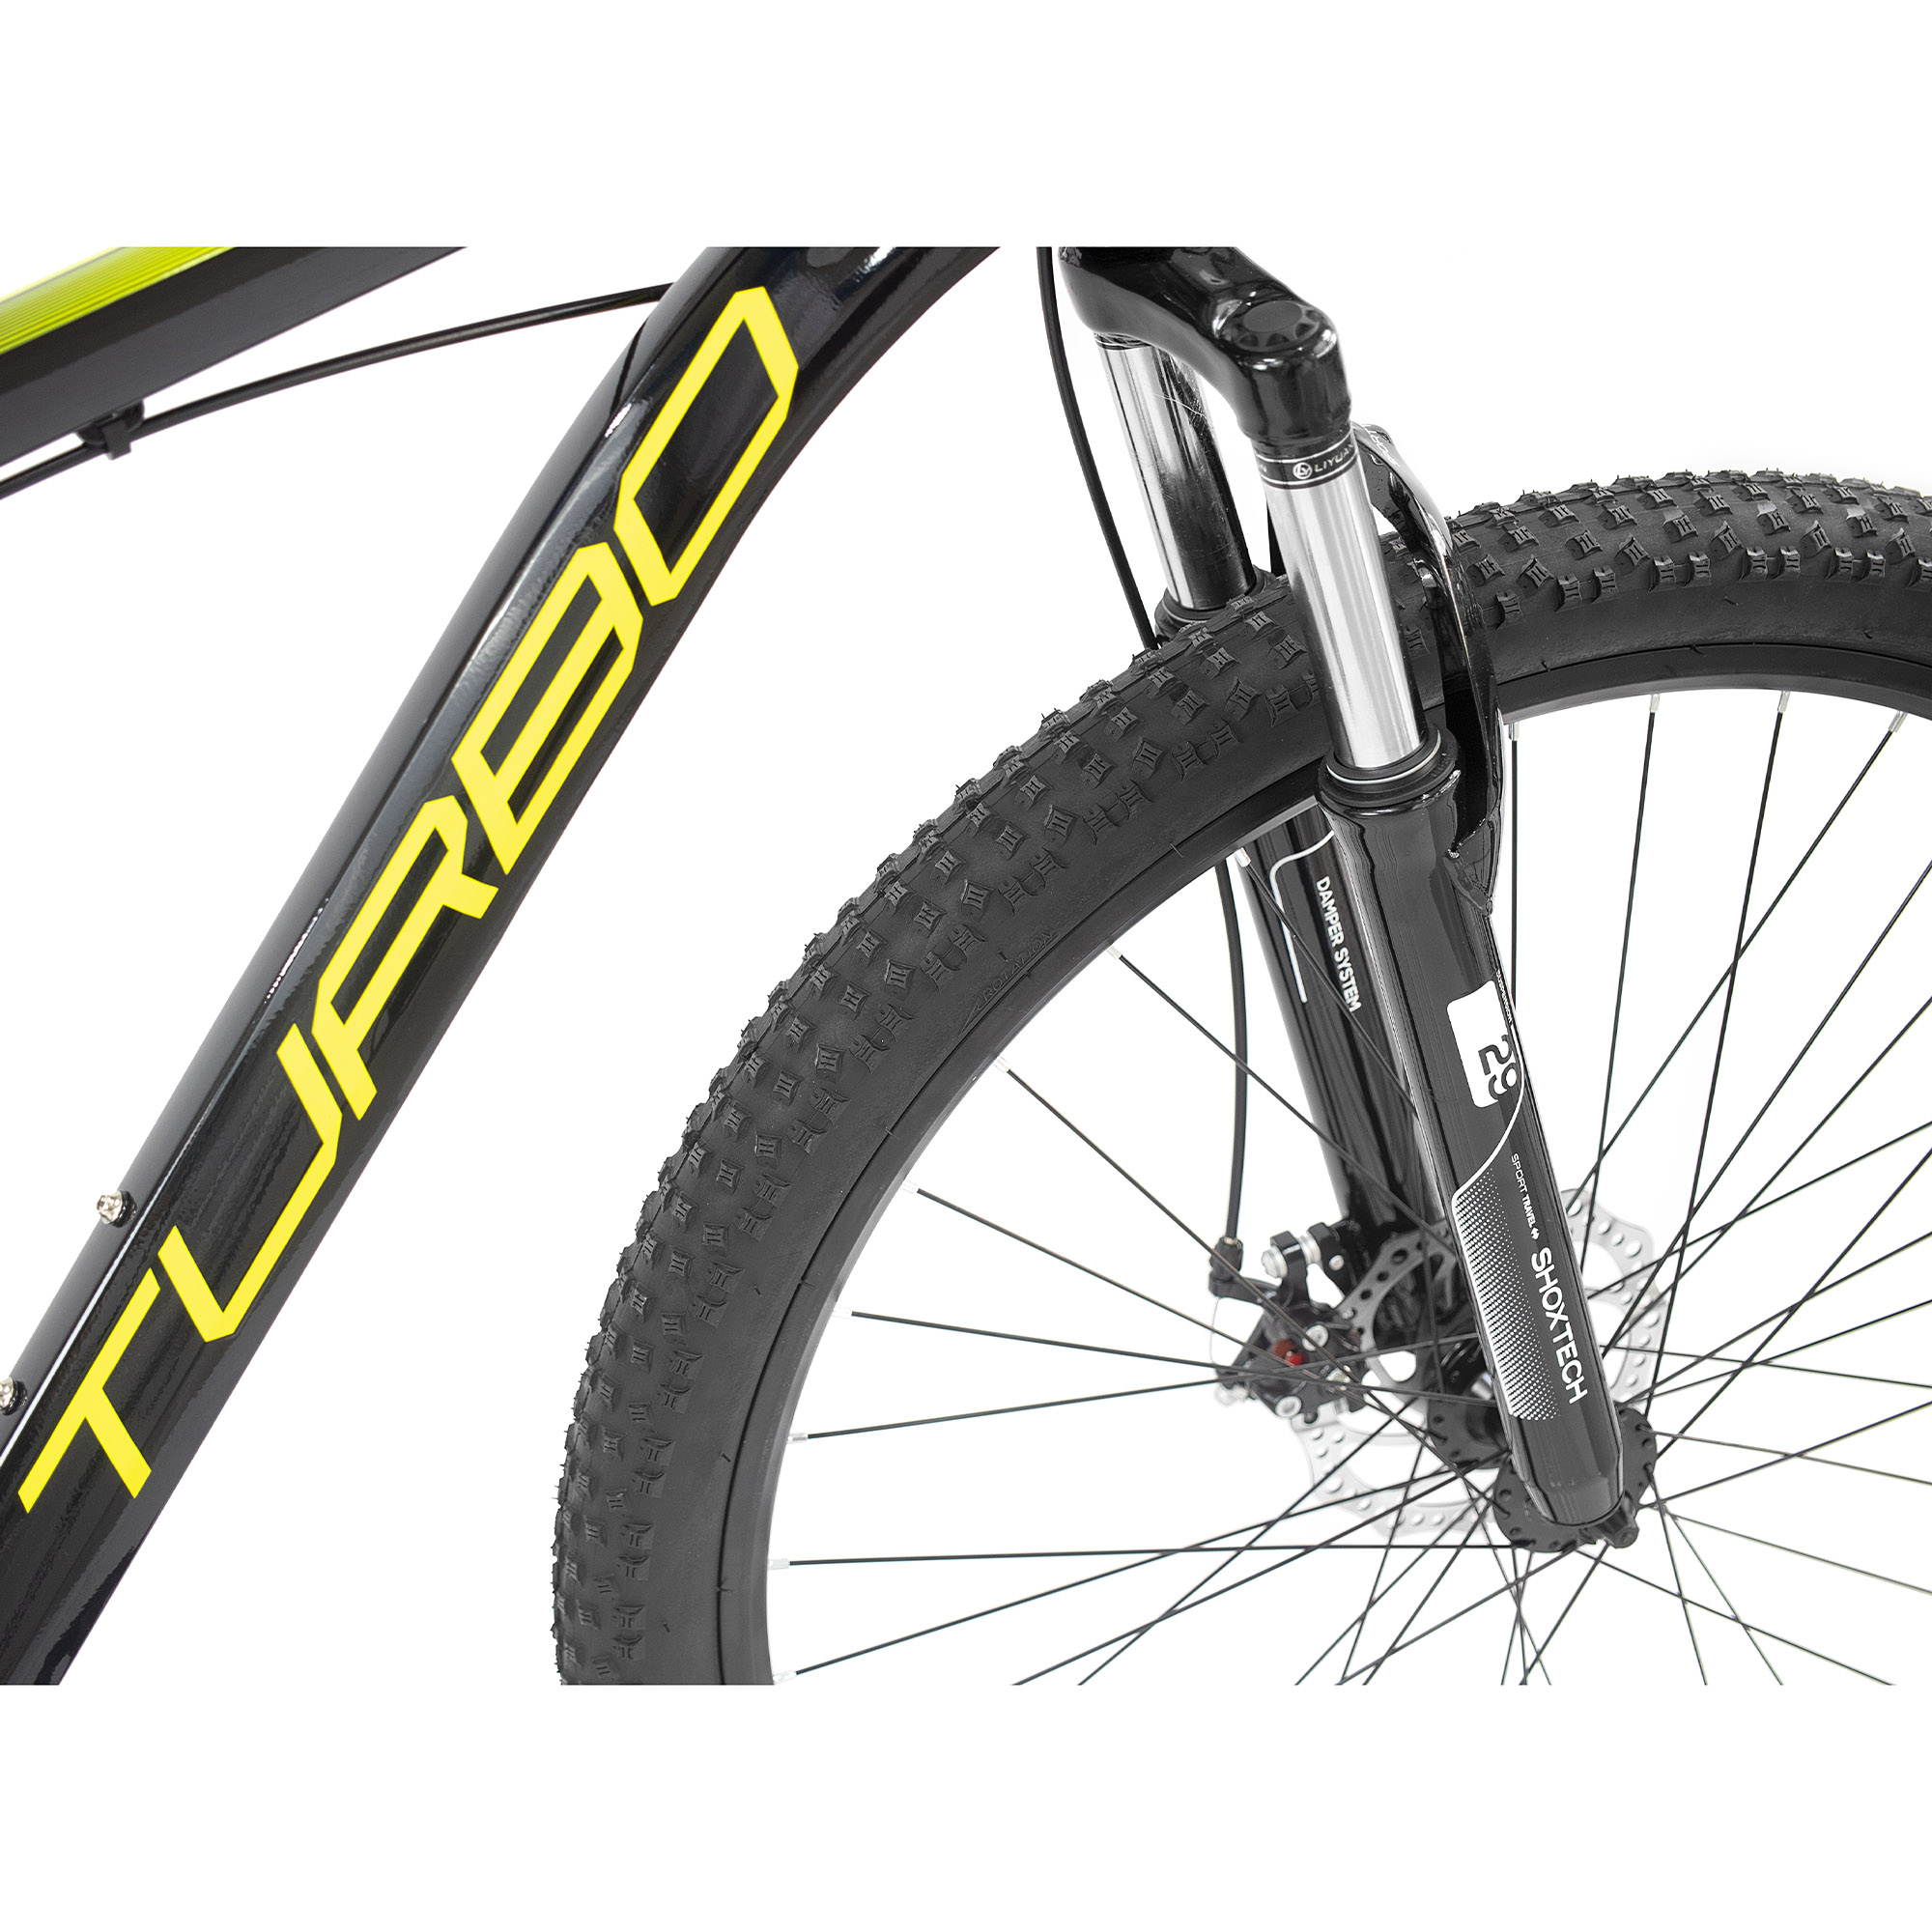 Bicimex Detalles Bicicleta R 29 Montaña TX 9.1 21 Aluminio negro amarillo Turbo